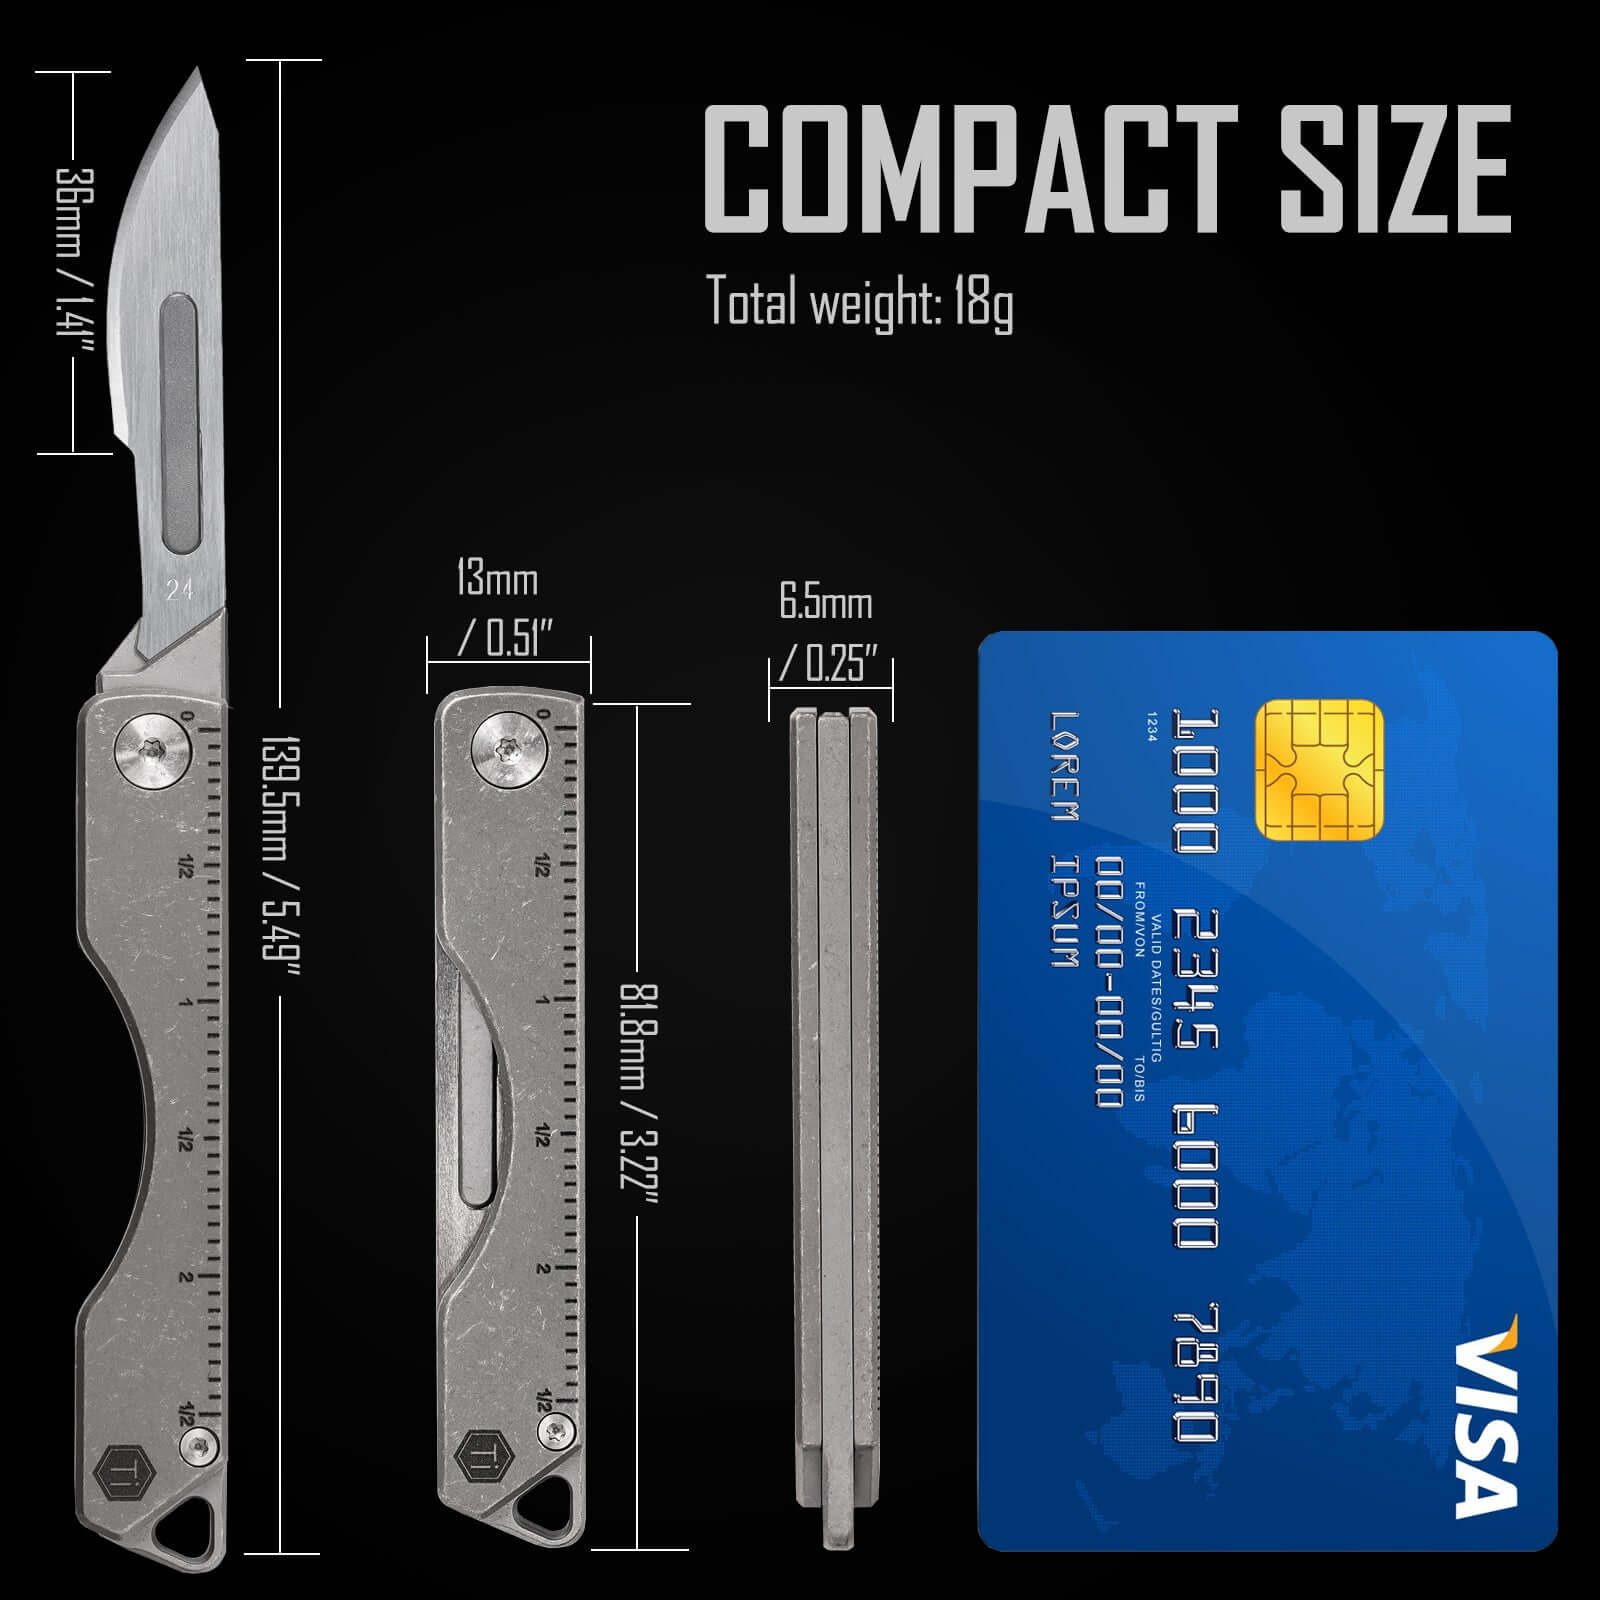 KK01AR Titanium Folding Knife, Utility EDC Pocket Knife with #24 Replaceable Blade (Ruler AR)